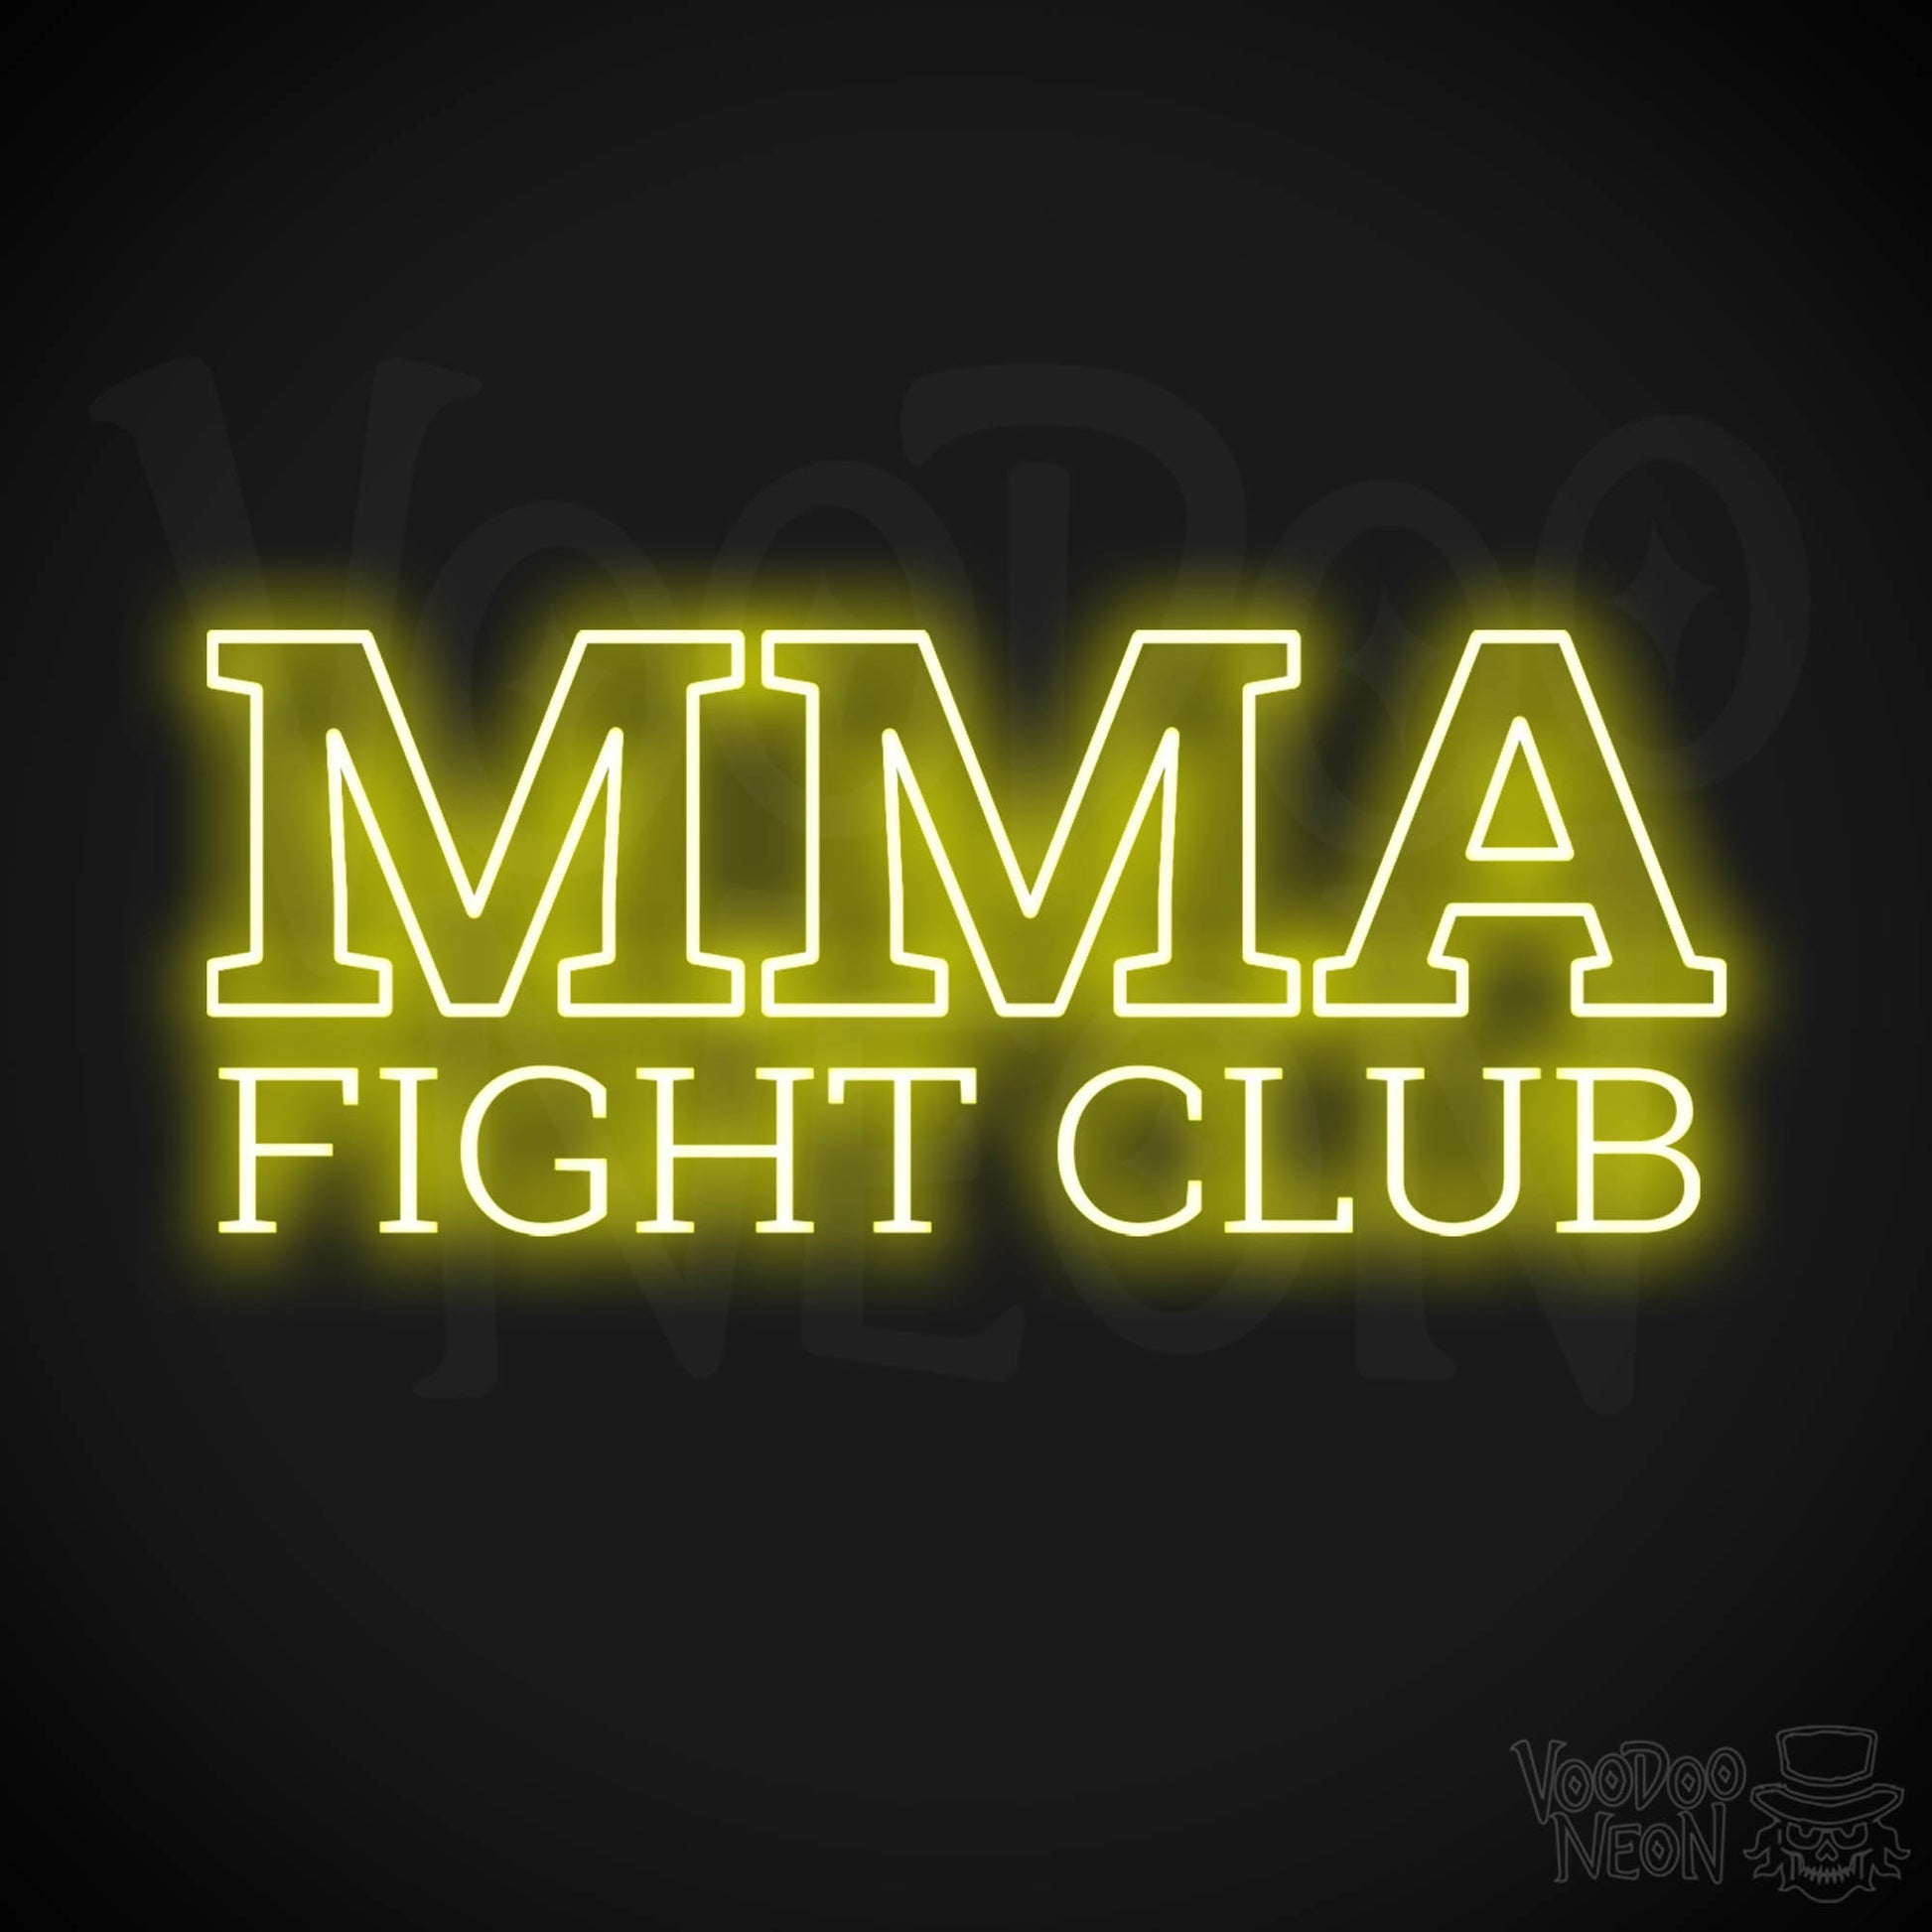 MMA Gym LED Neon - Yellow